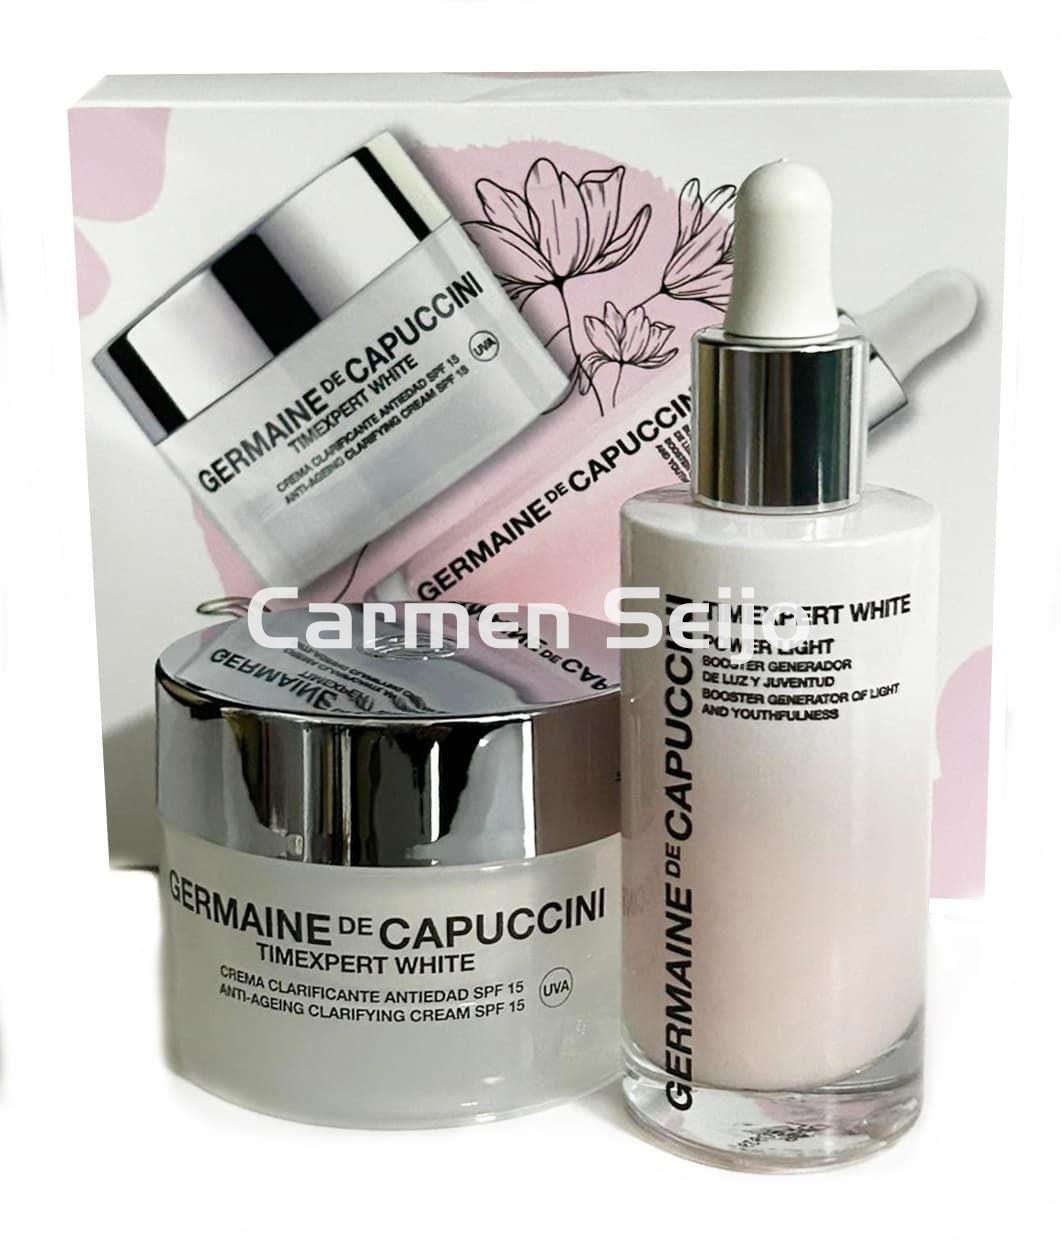 Germaine de Capuccini Pack Despigmentante Brighten Your Face Timexpert White - Imagen 1